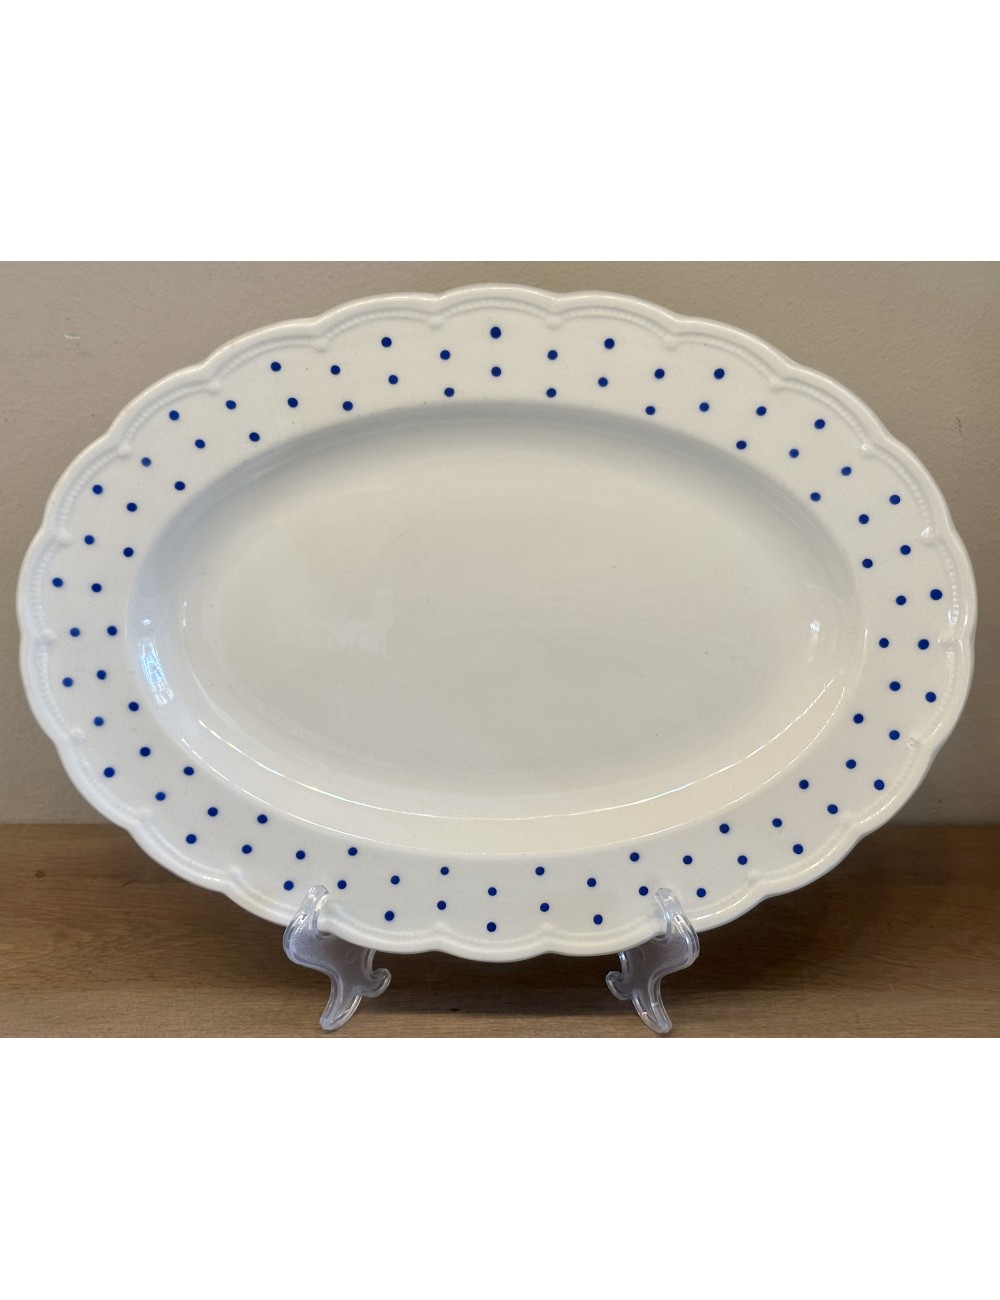 Plate - flat oval model - Boch - shape FESTIVAL - décor with blue dots/spheres